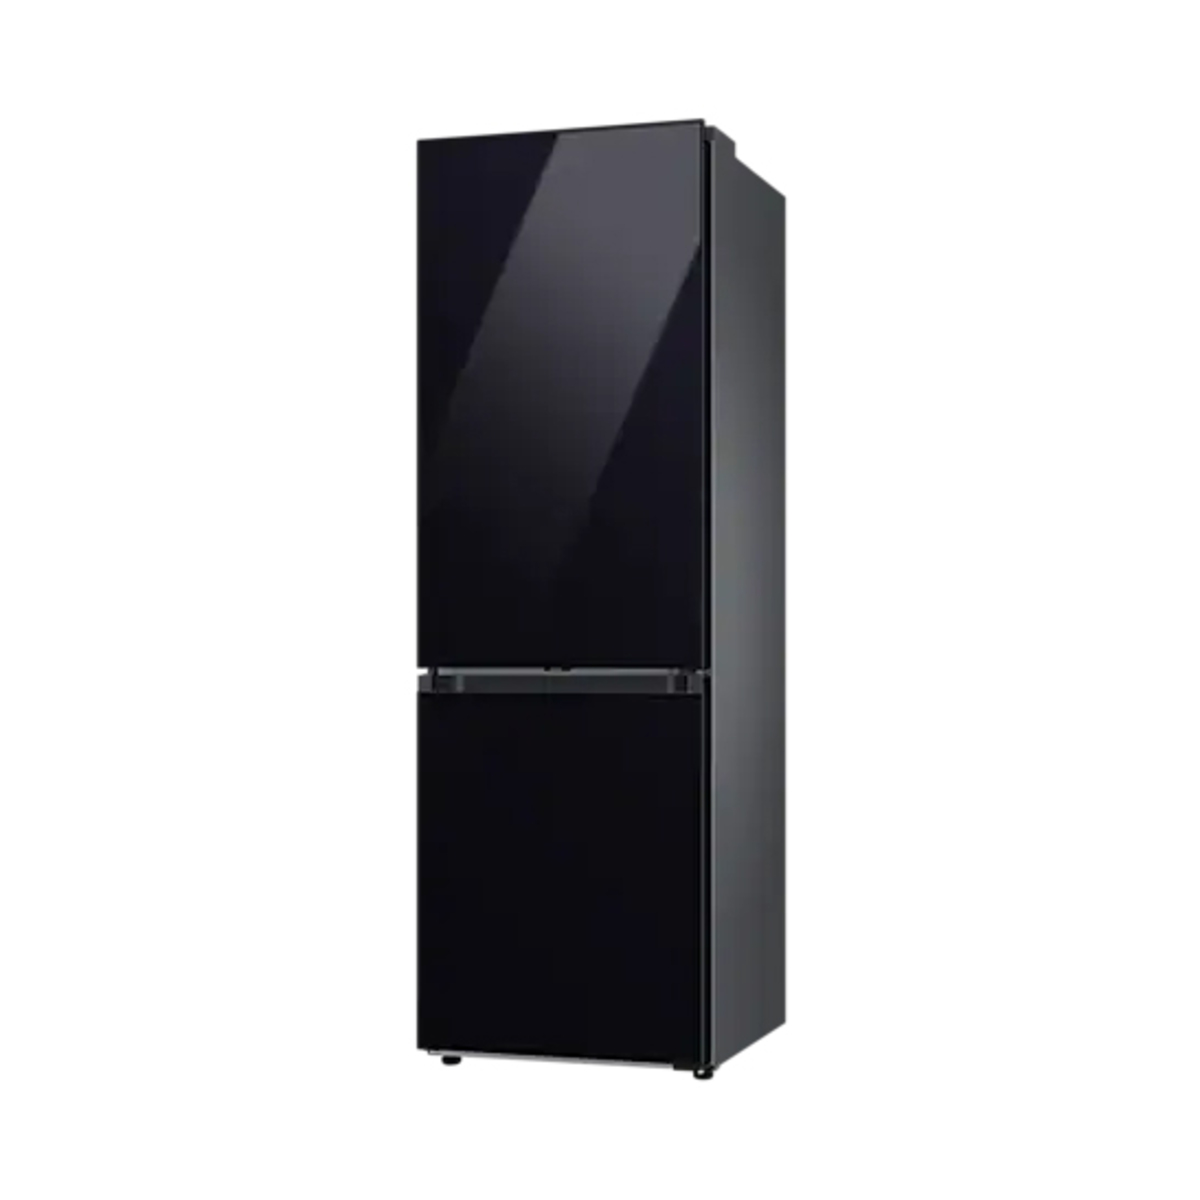 Samsung RB34A6B2E22/EU E Rated Bespoke 1.85m Fridge Freezer, Clean Black